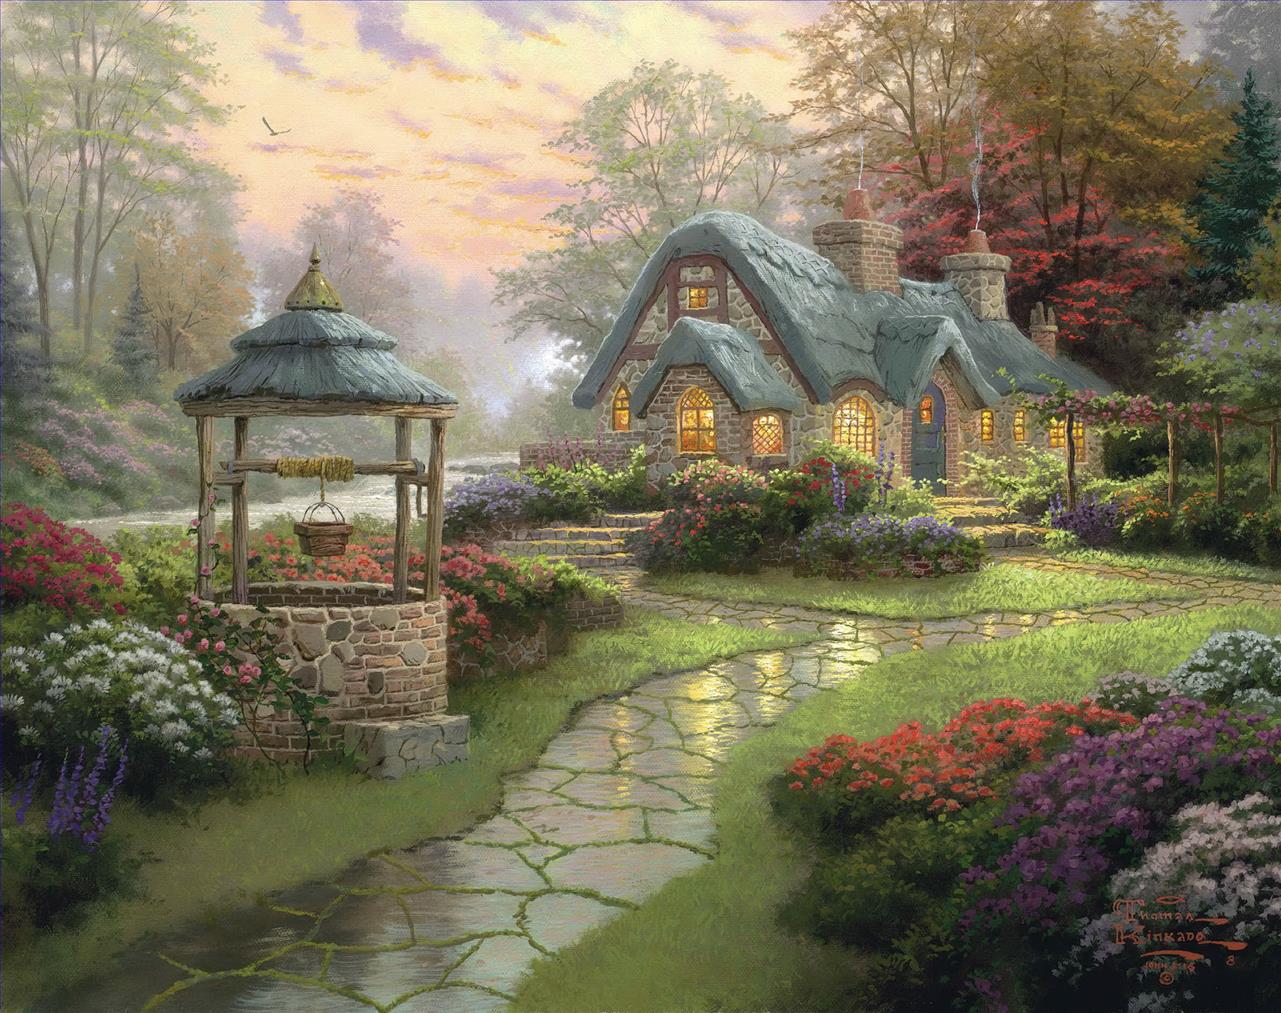 Make a Wish Cottage Thomas Kinkade Oil Paintings